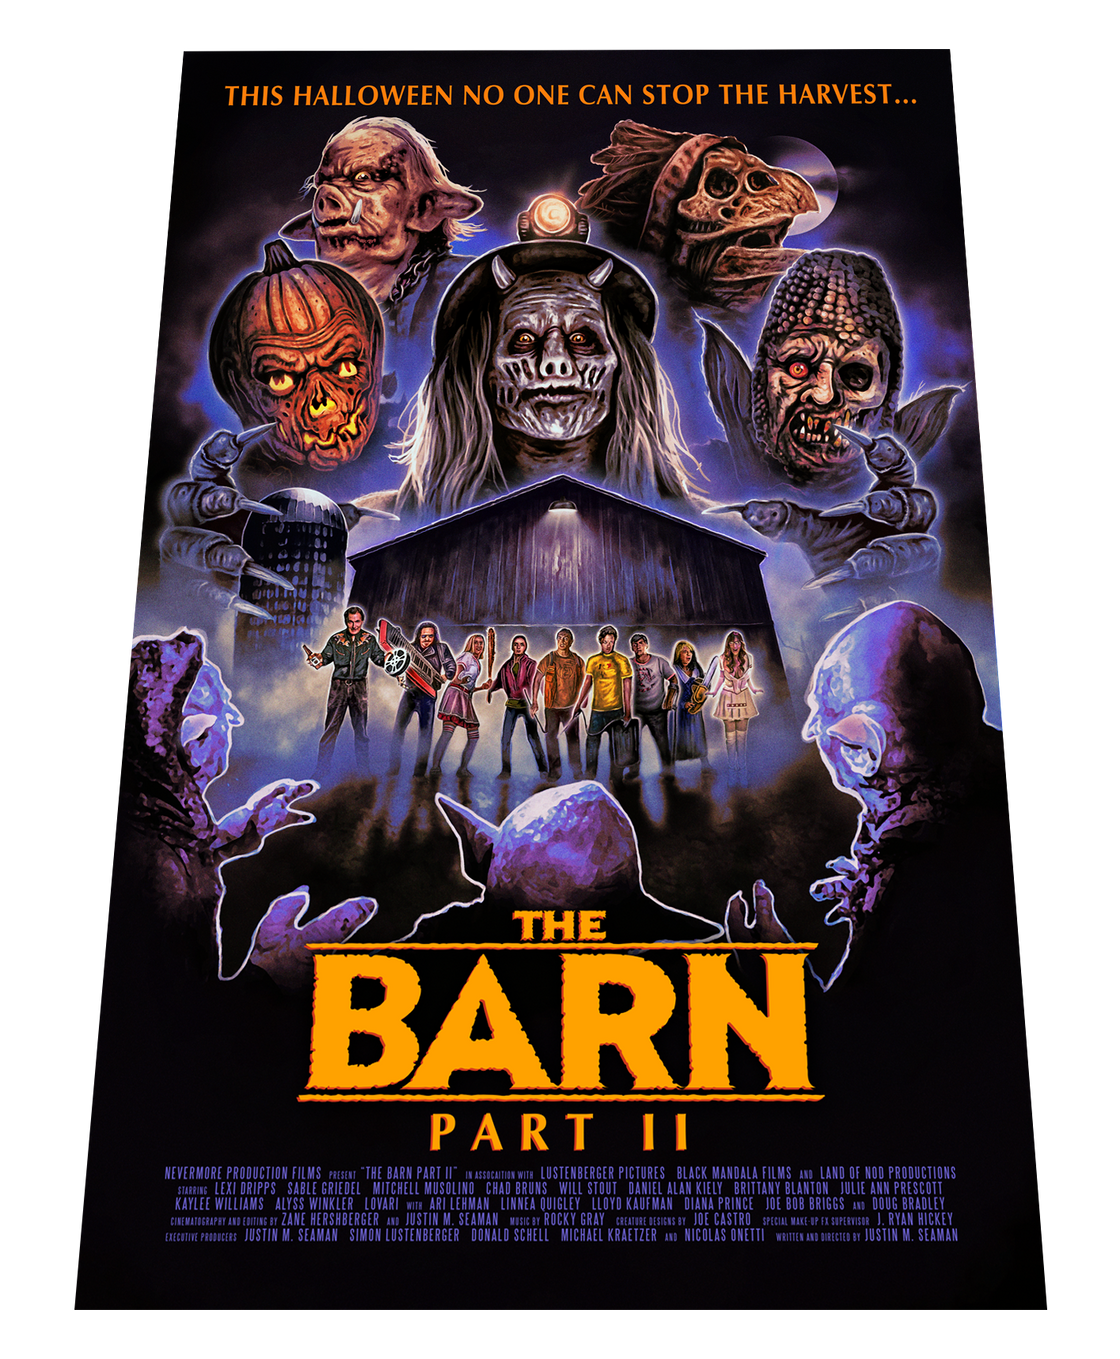 The Barn Part II - Poster - Sadist Art Designs Poster (11x17)